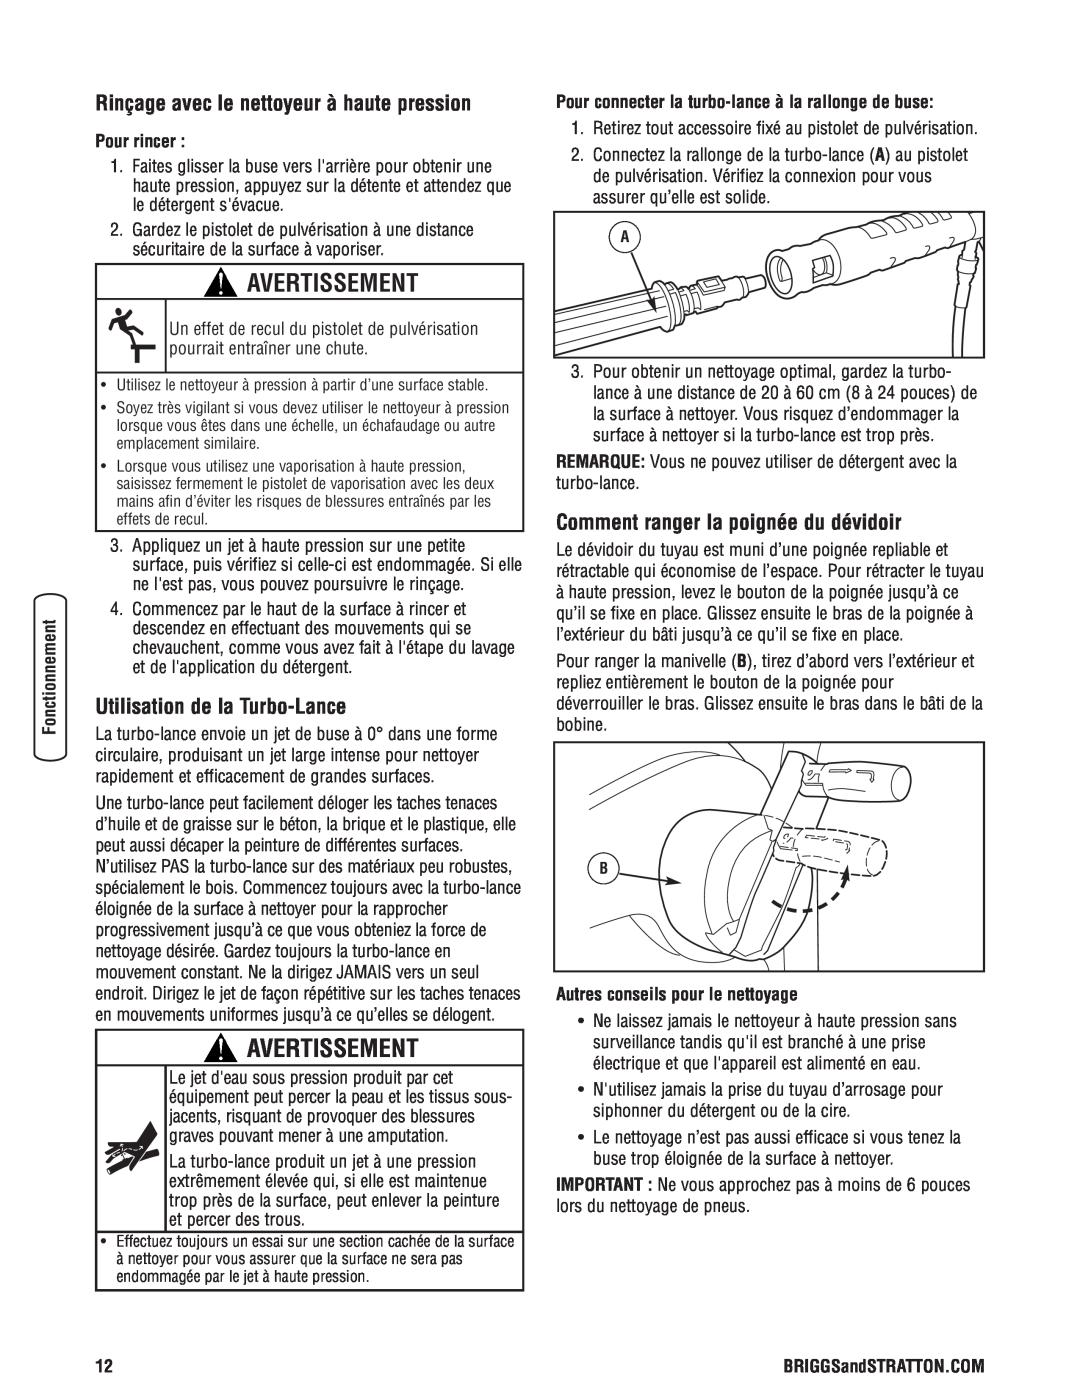 Briggs & Stratton Electric Pressure Washer manual Rinçage avec le nettoyeur à haute pression, Utilisation de la Turbo-Lance 